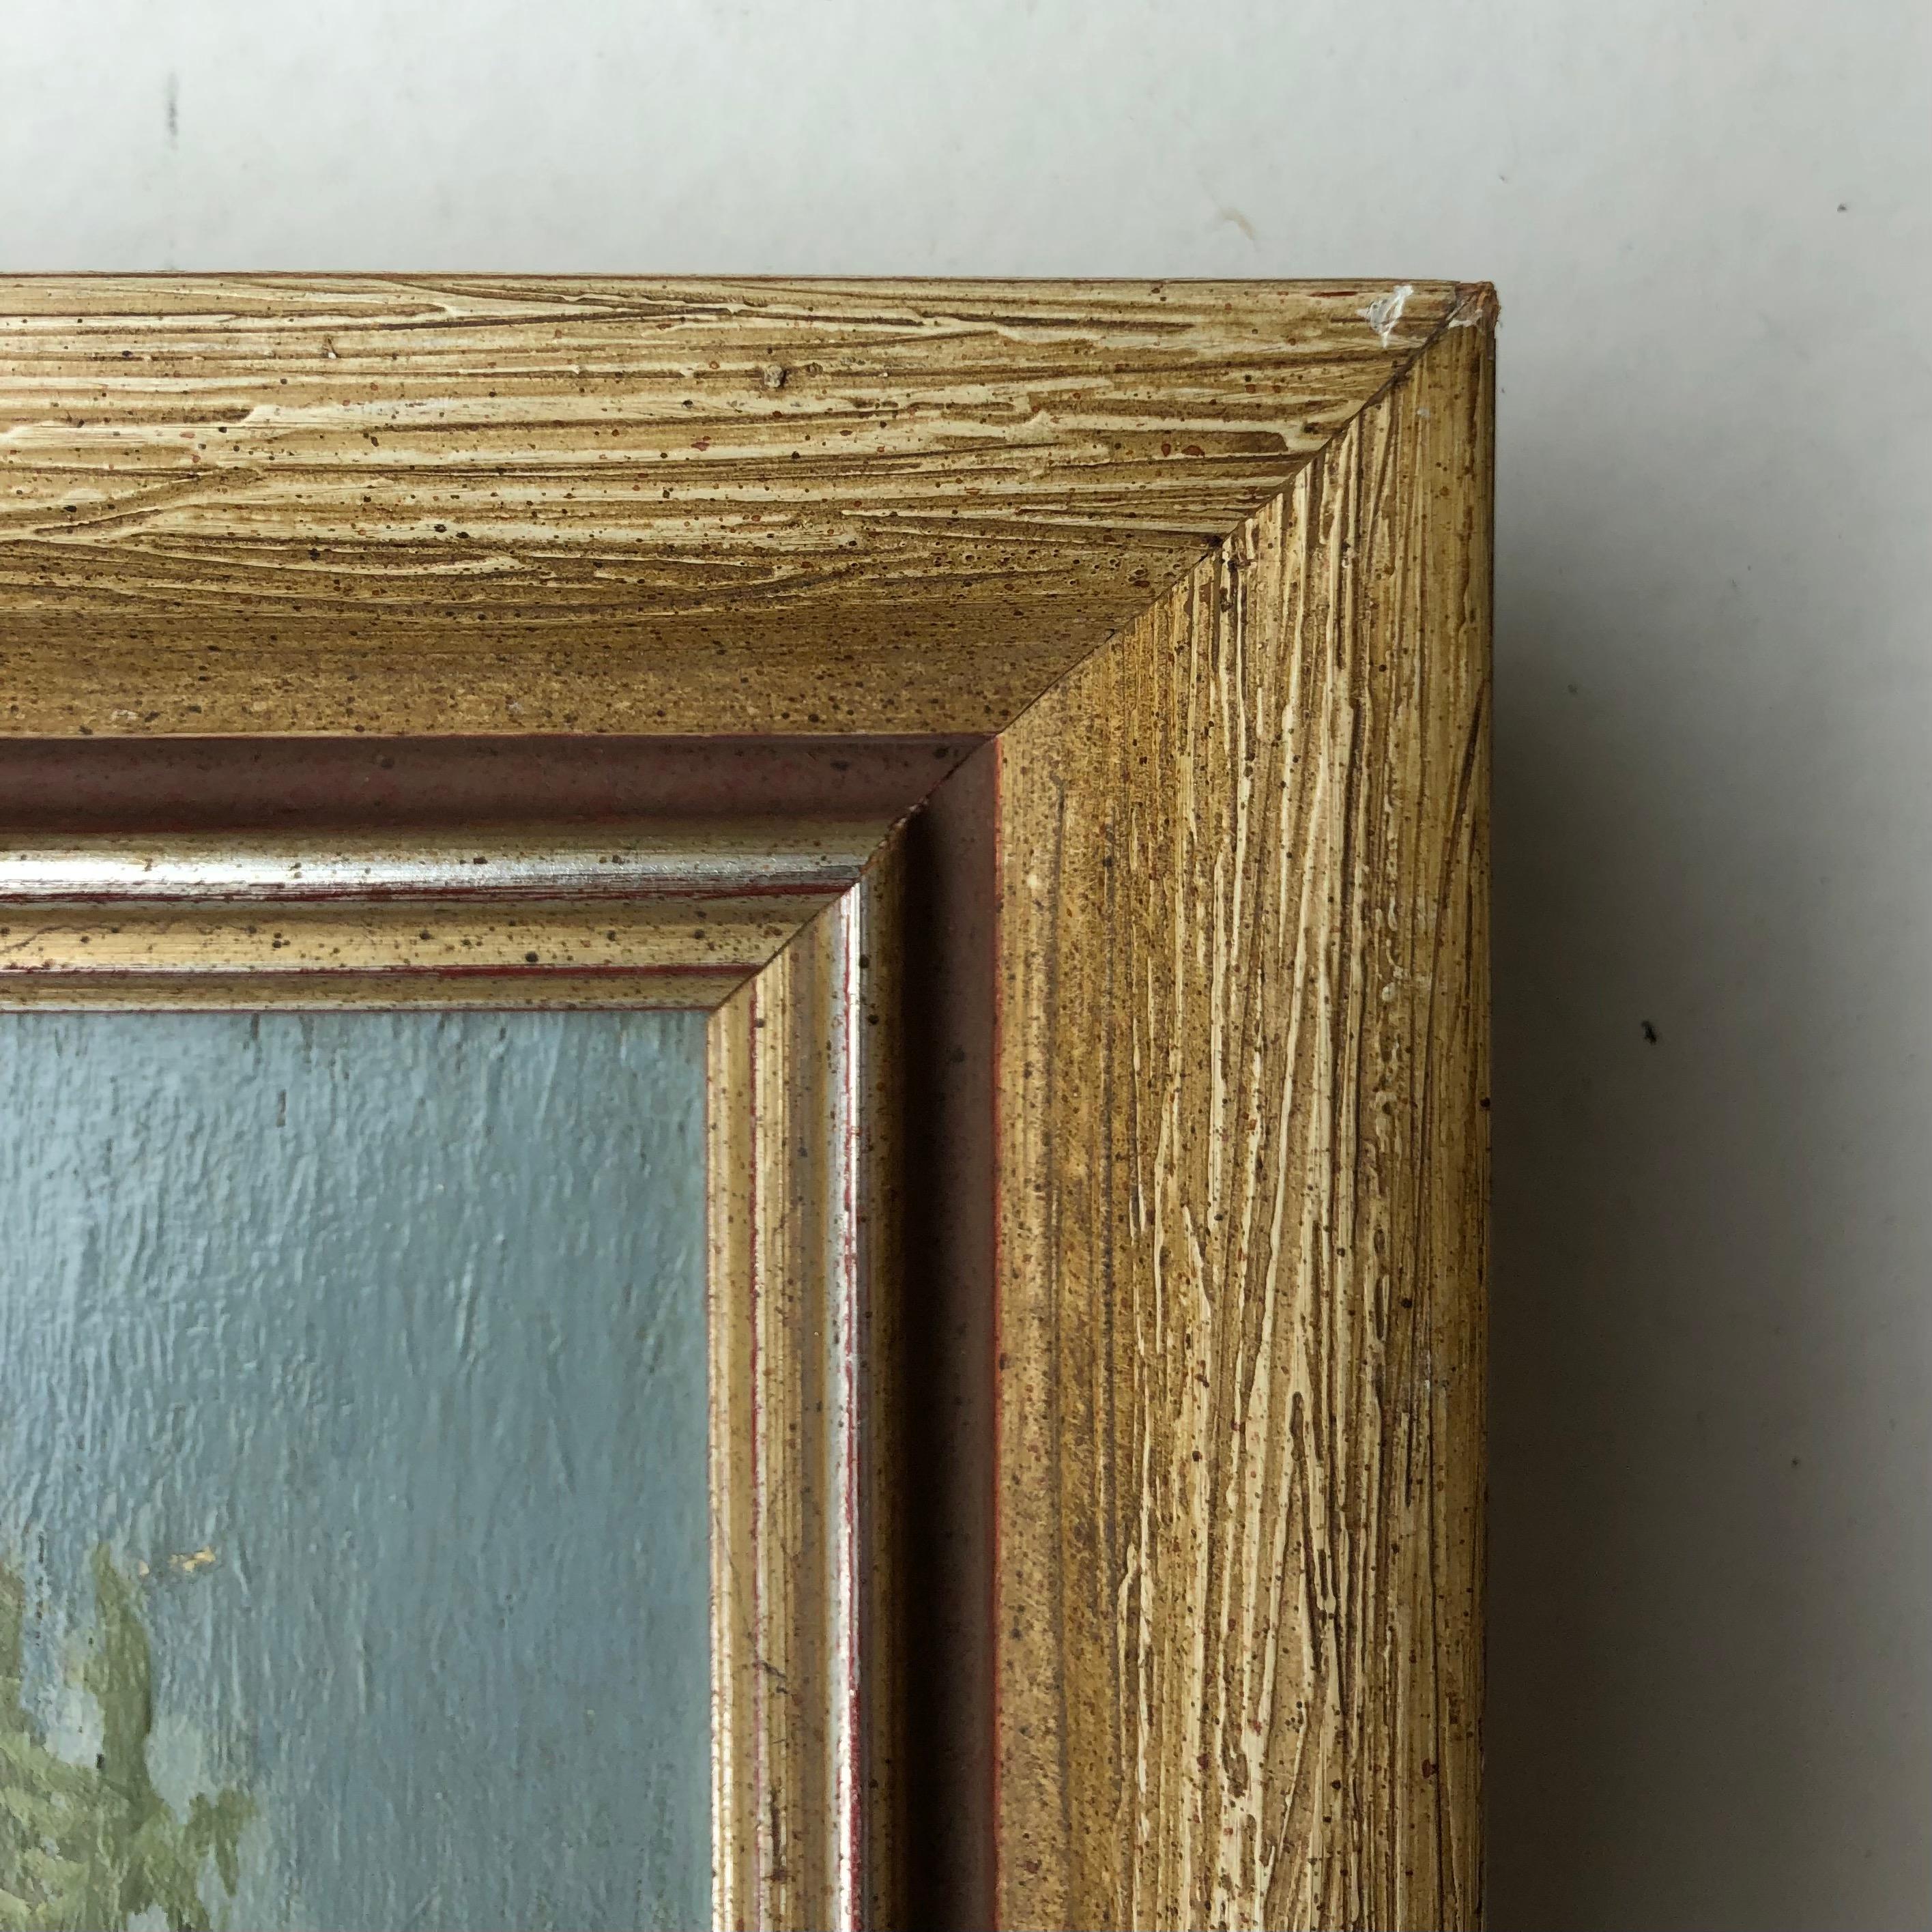 Work on wood
Brown wooden frame
48.2 x 33.5 x 3.7 cm